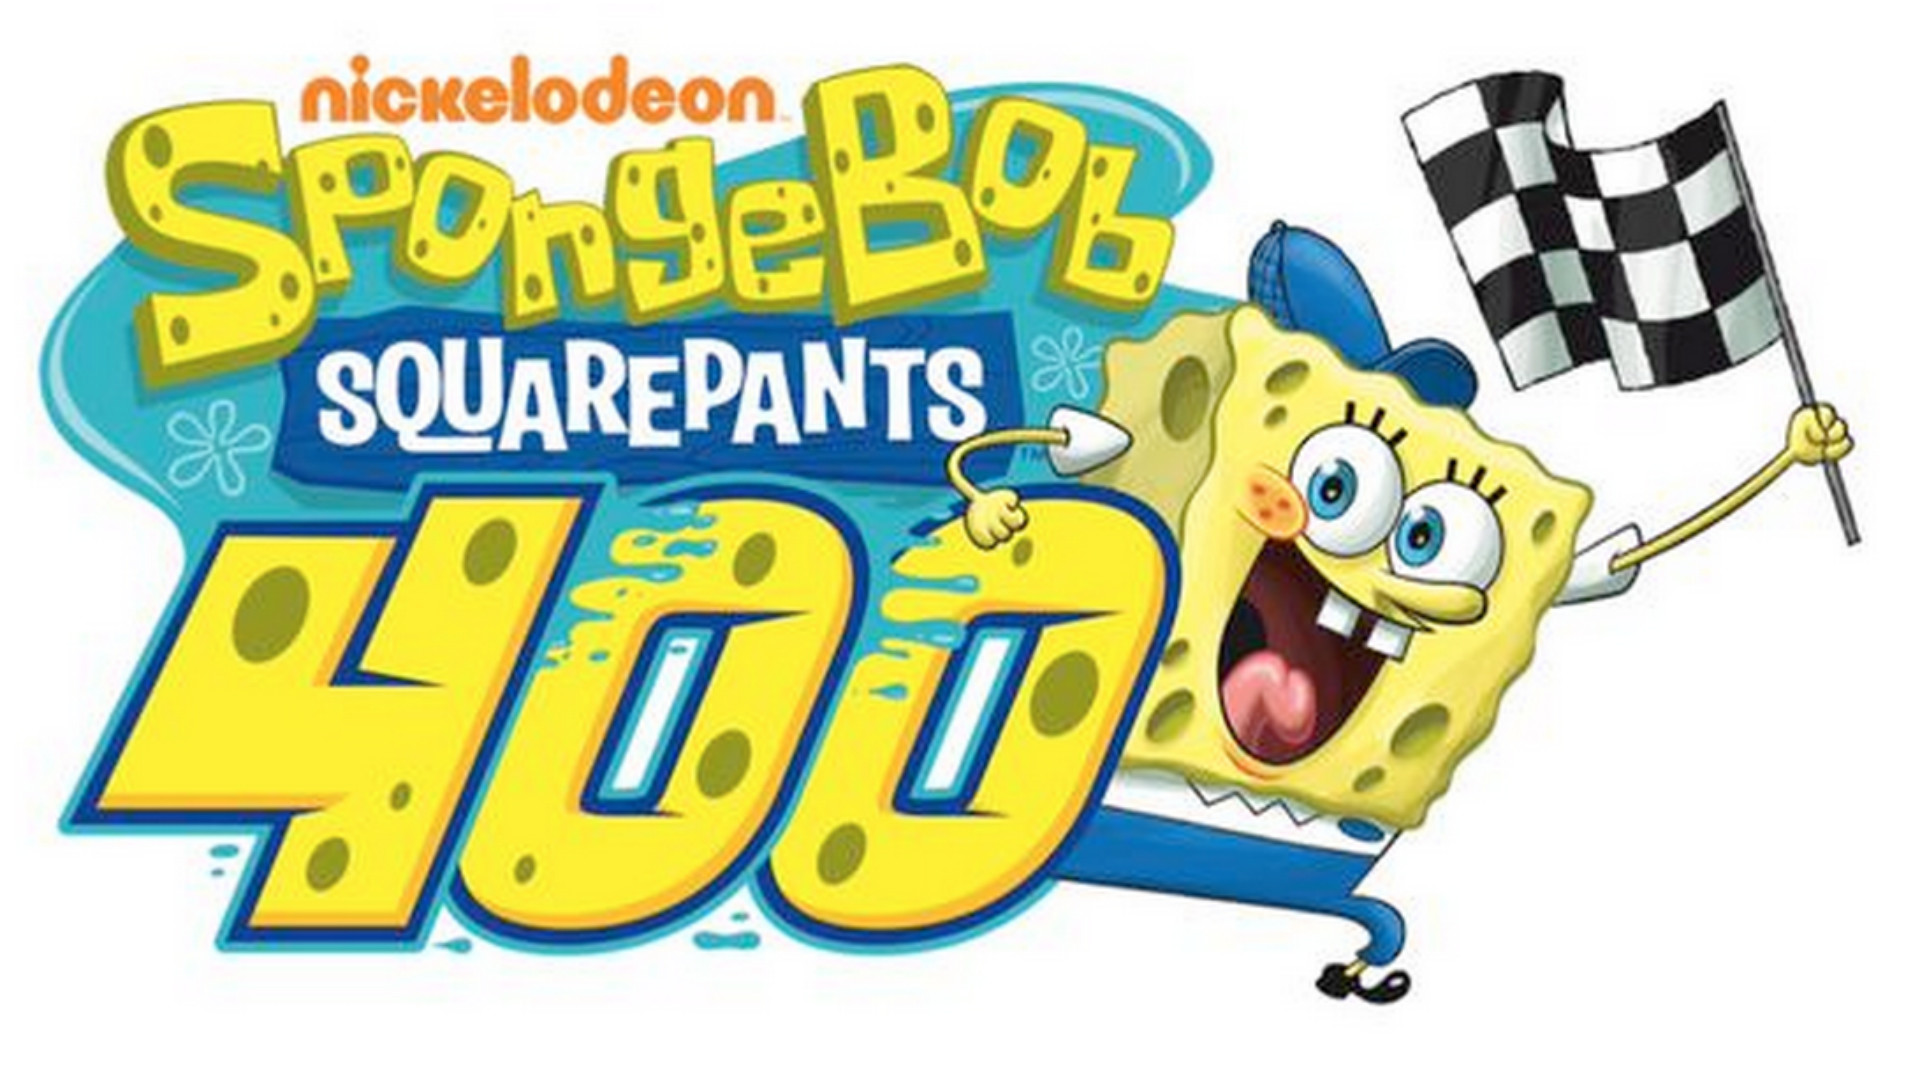 1920x1080 NASCAR meets Nickelodeon, announces SpongeBob SquarePants 400